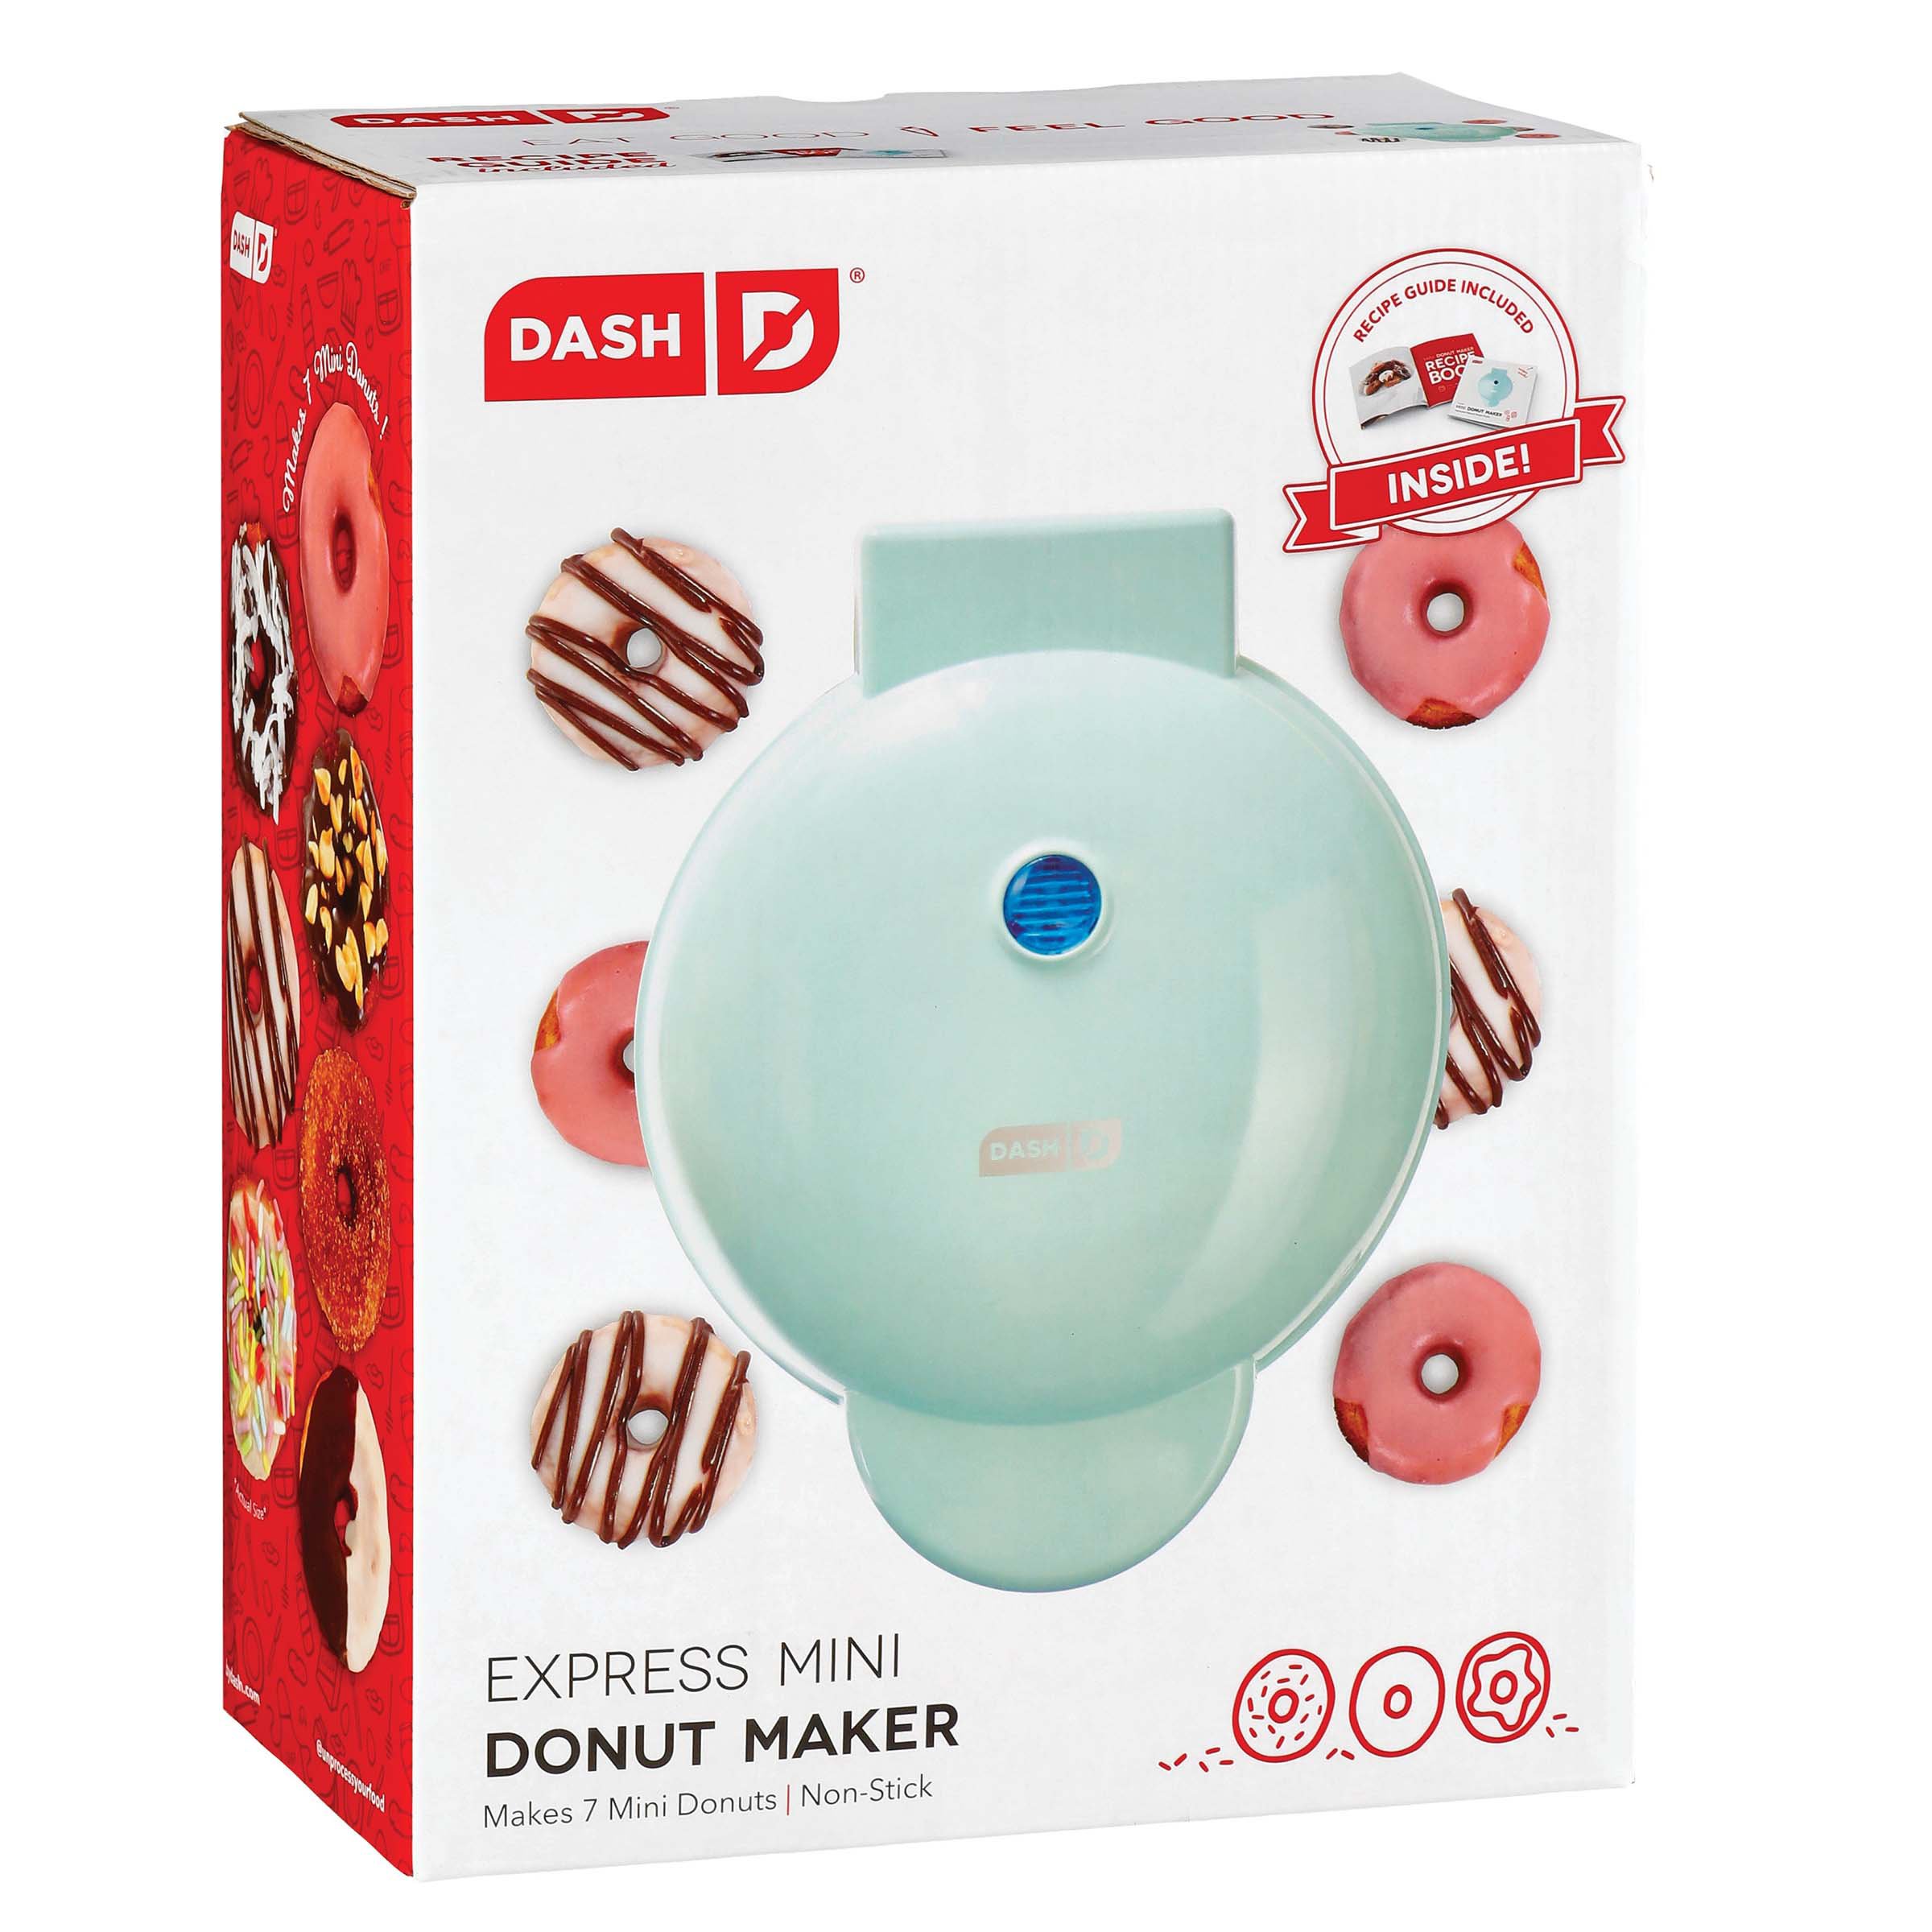 Dash Personal Donut Maker Each